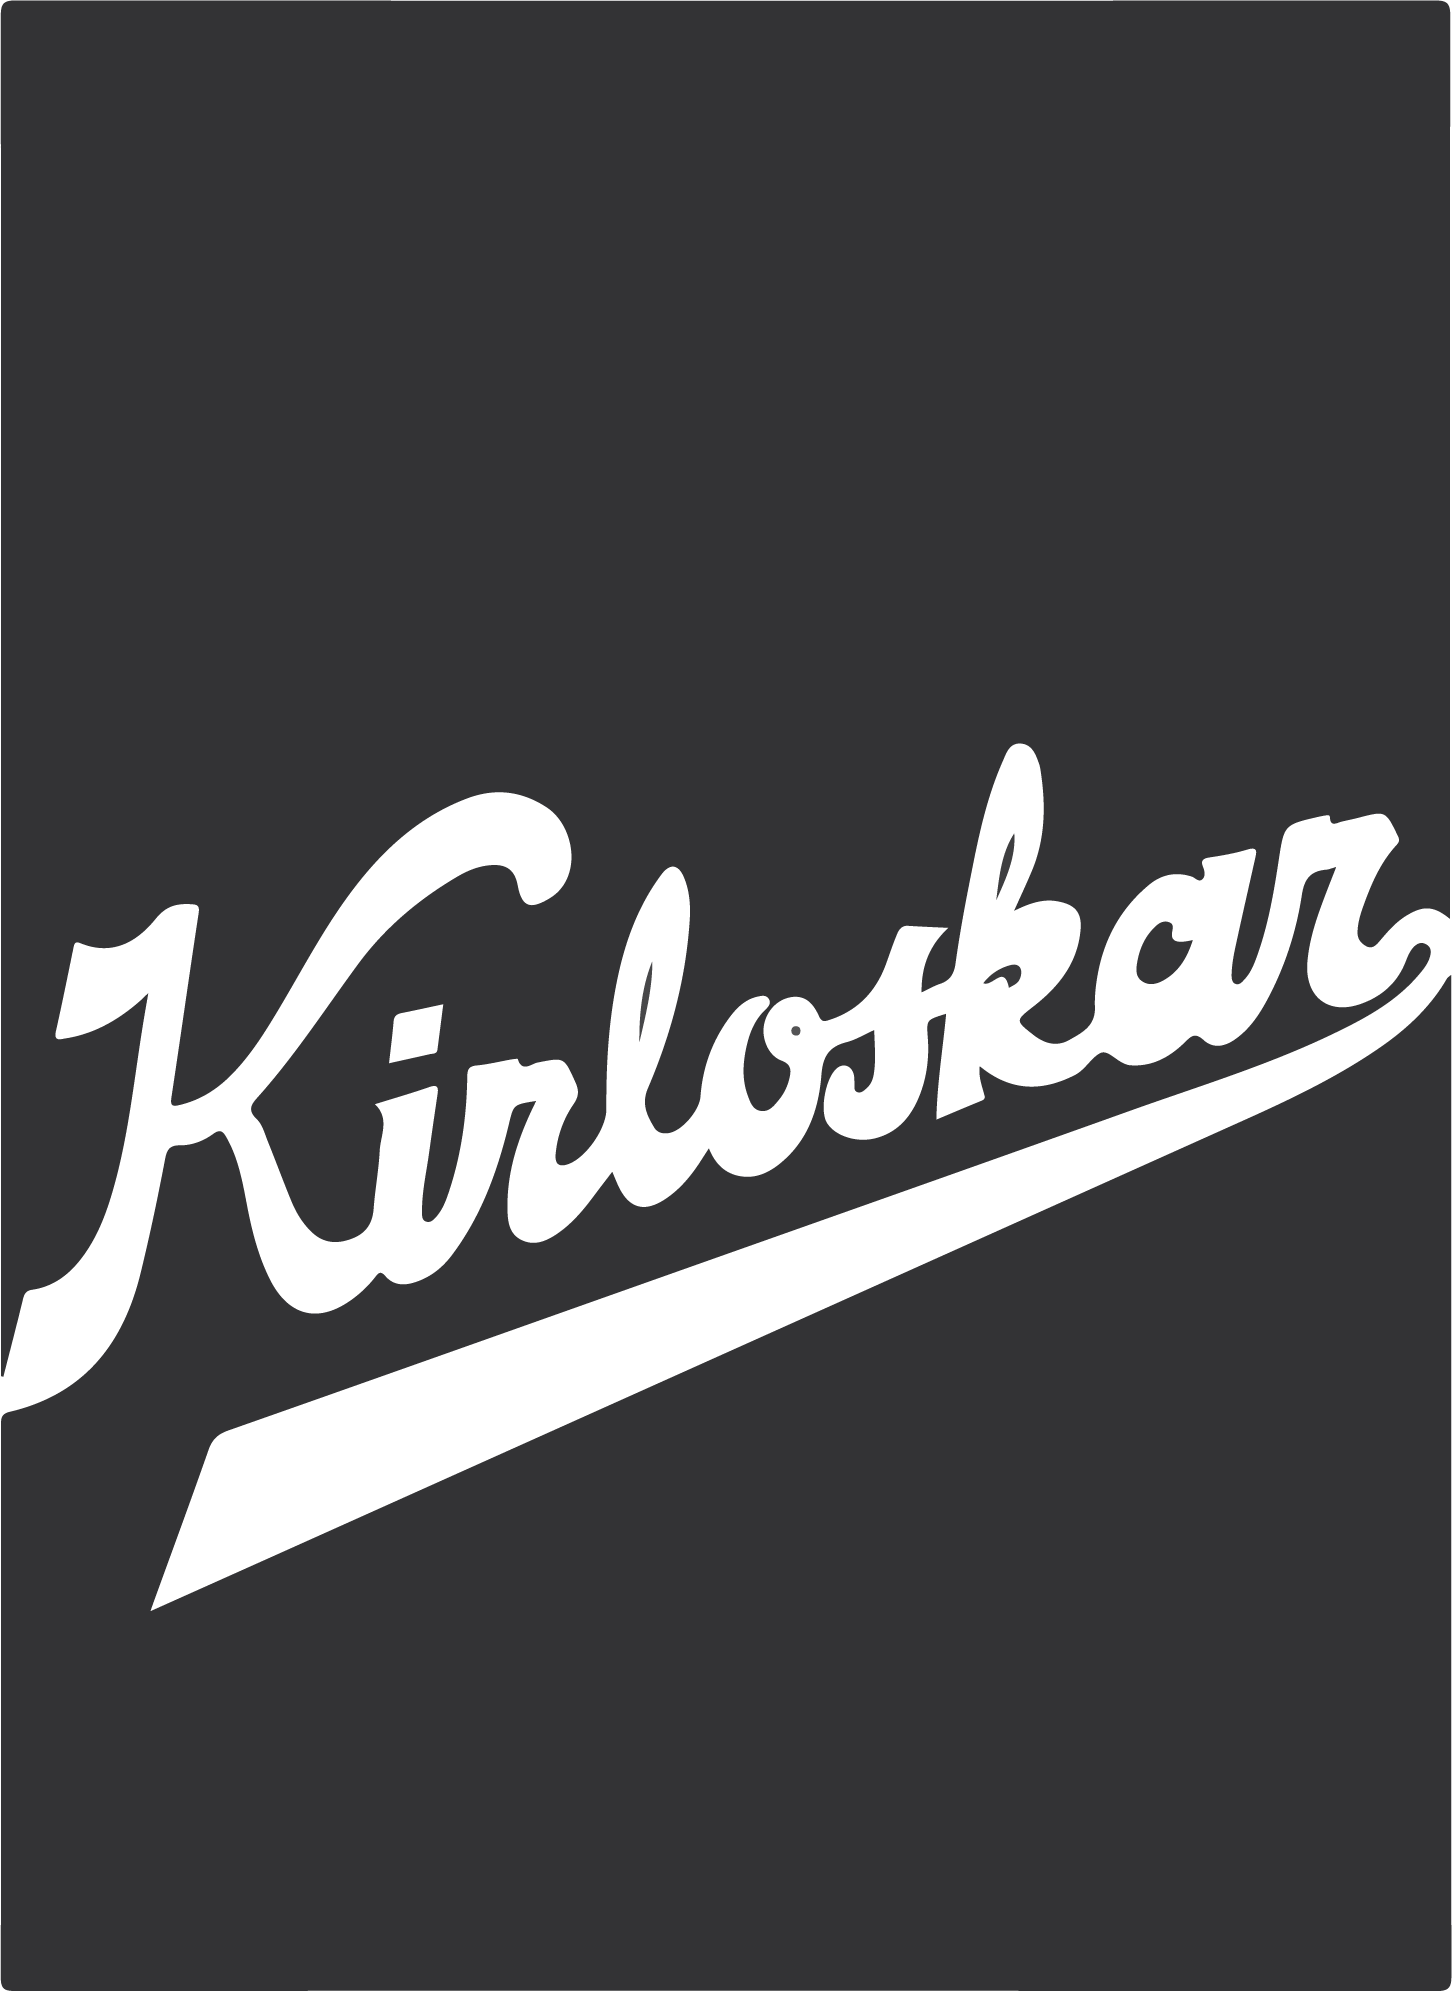 Kirloskar Ferrous Industries logo (transparent PNG)